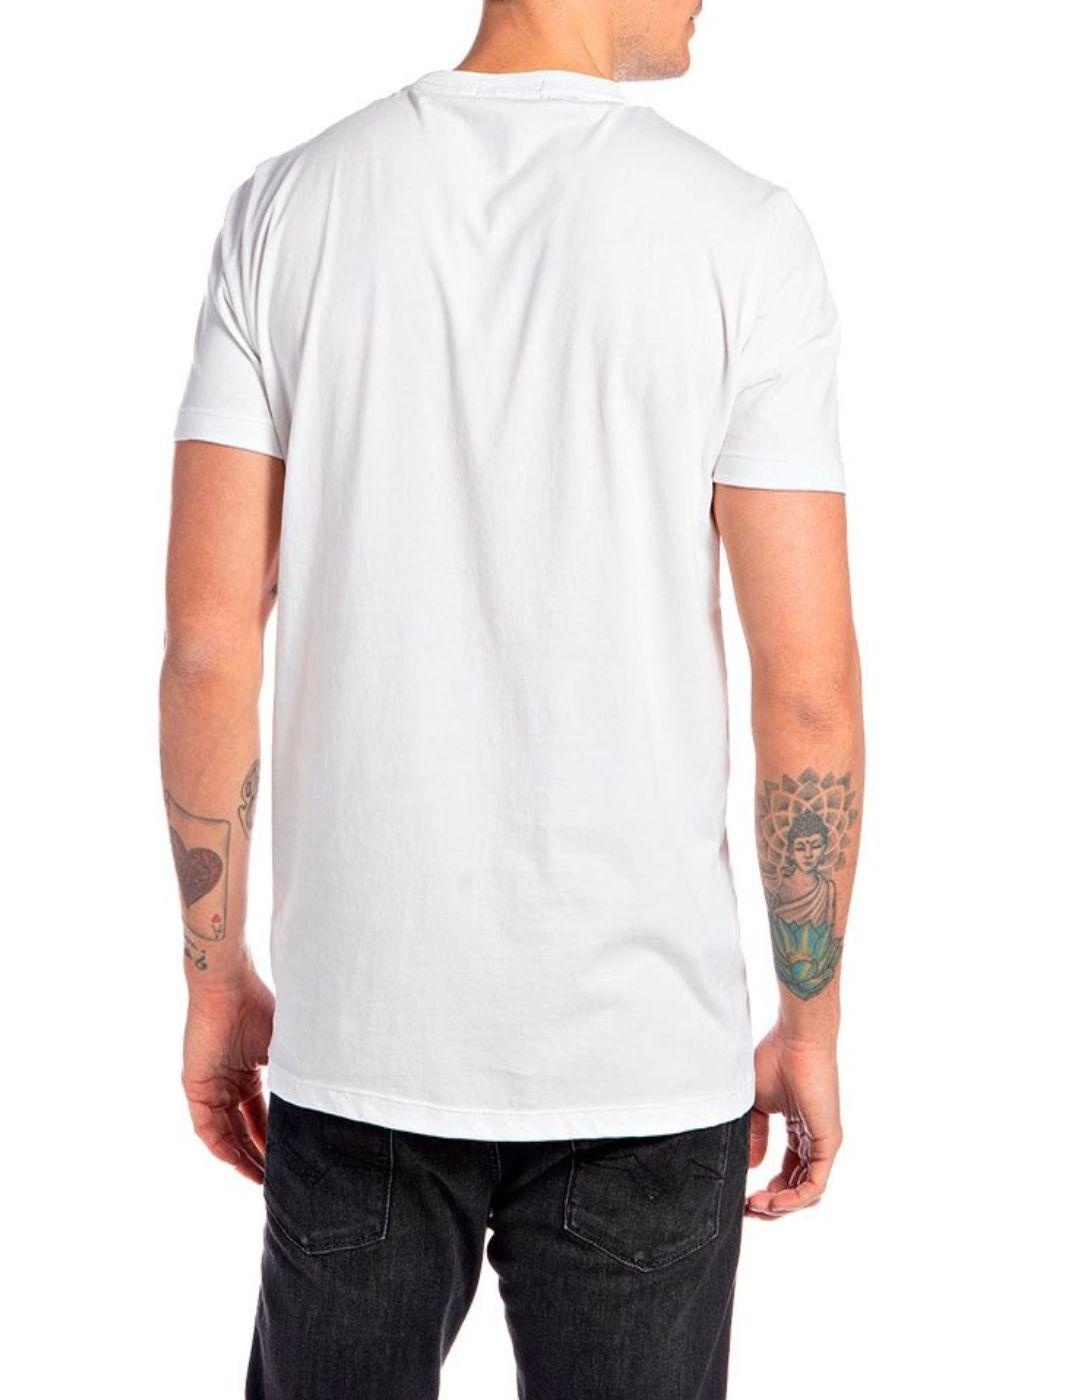 Camiseta Replay blanca para hombre -b